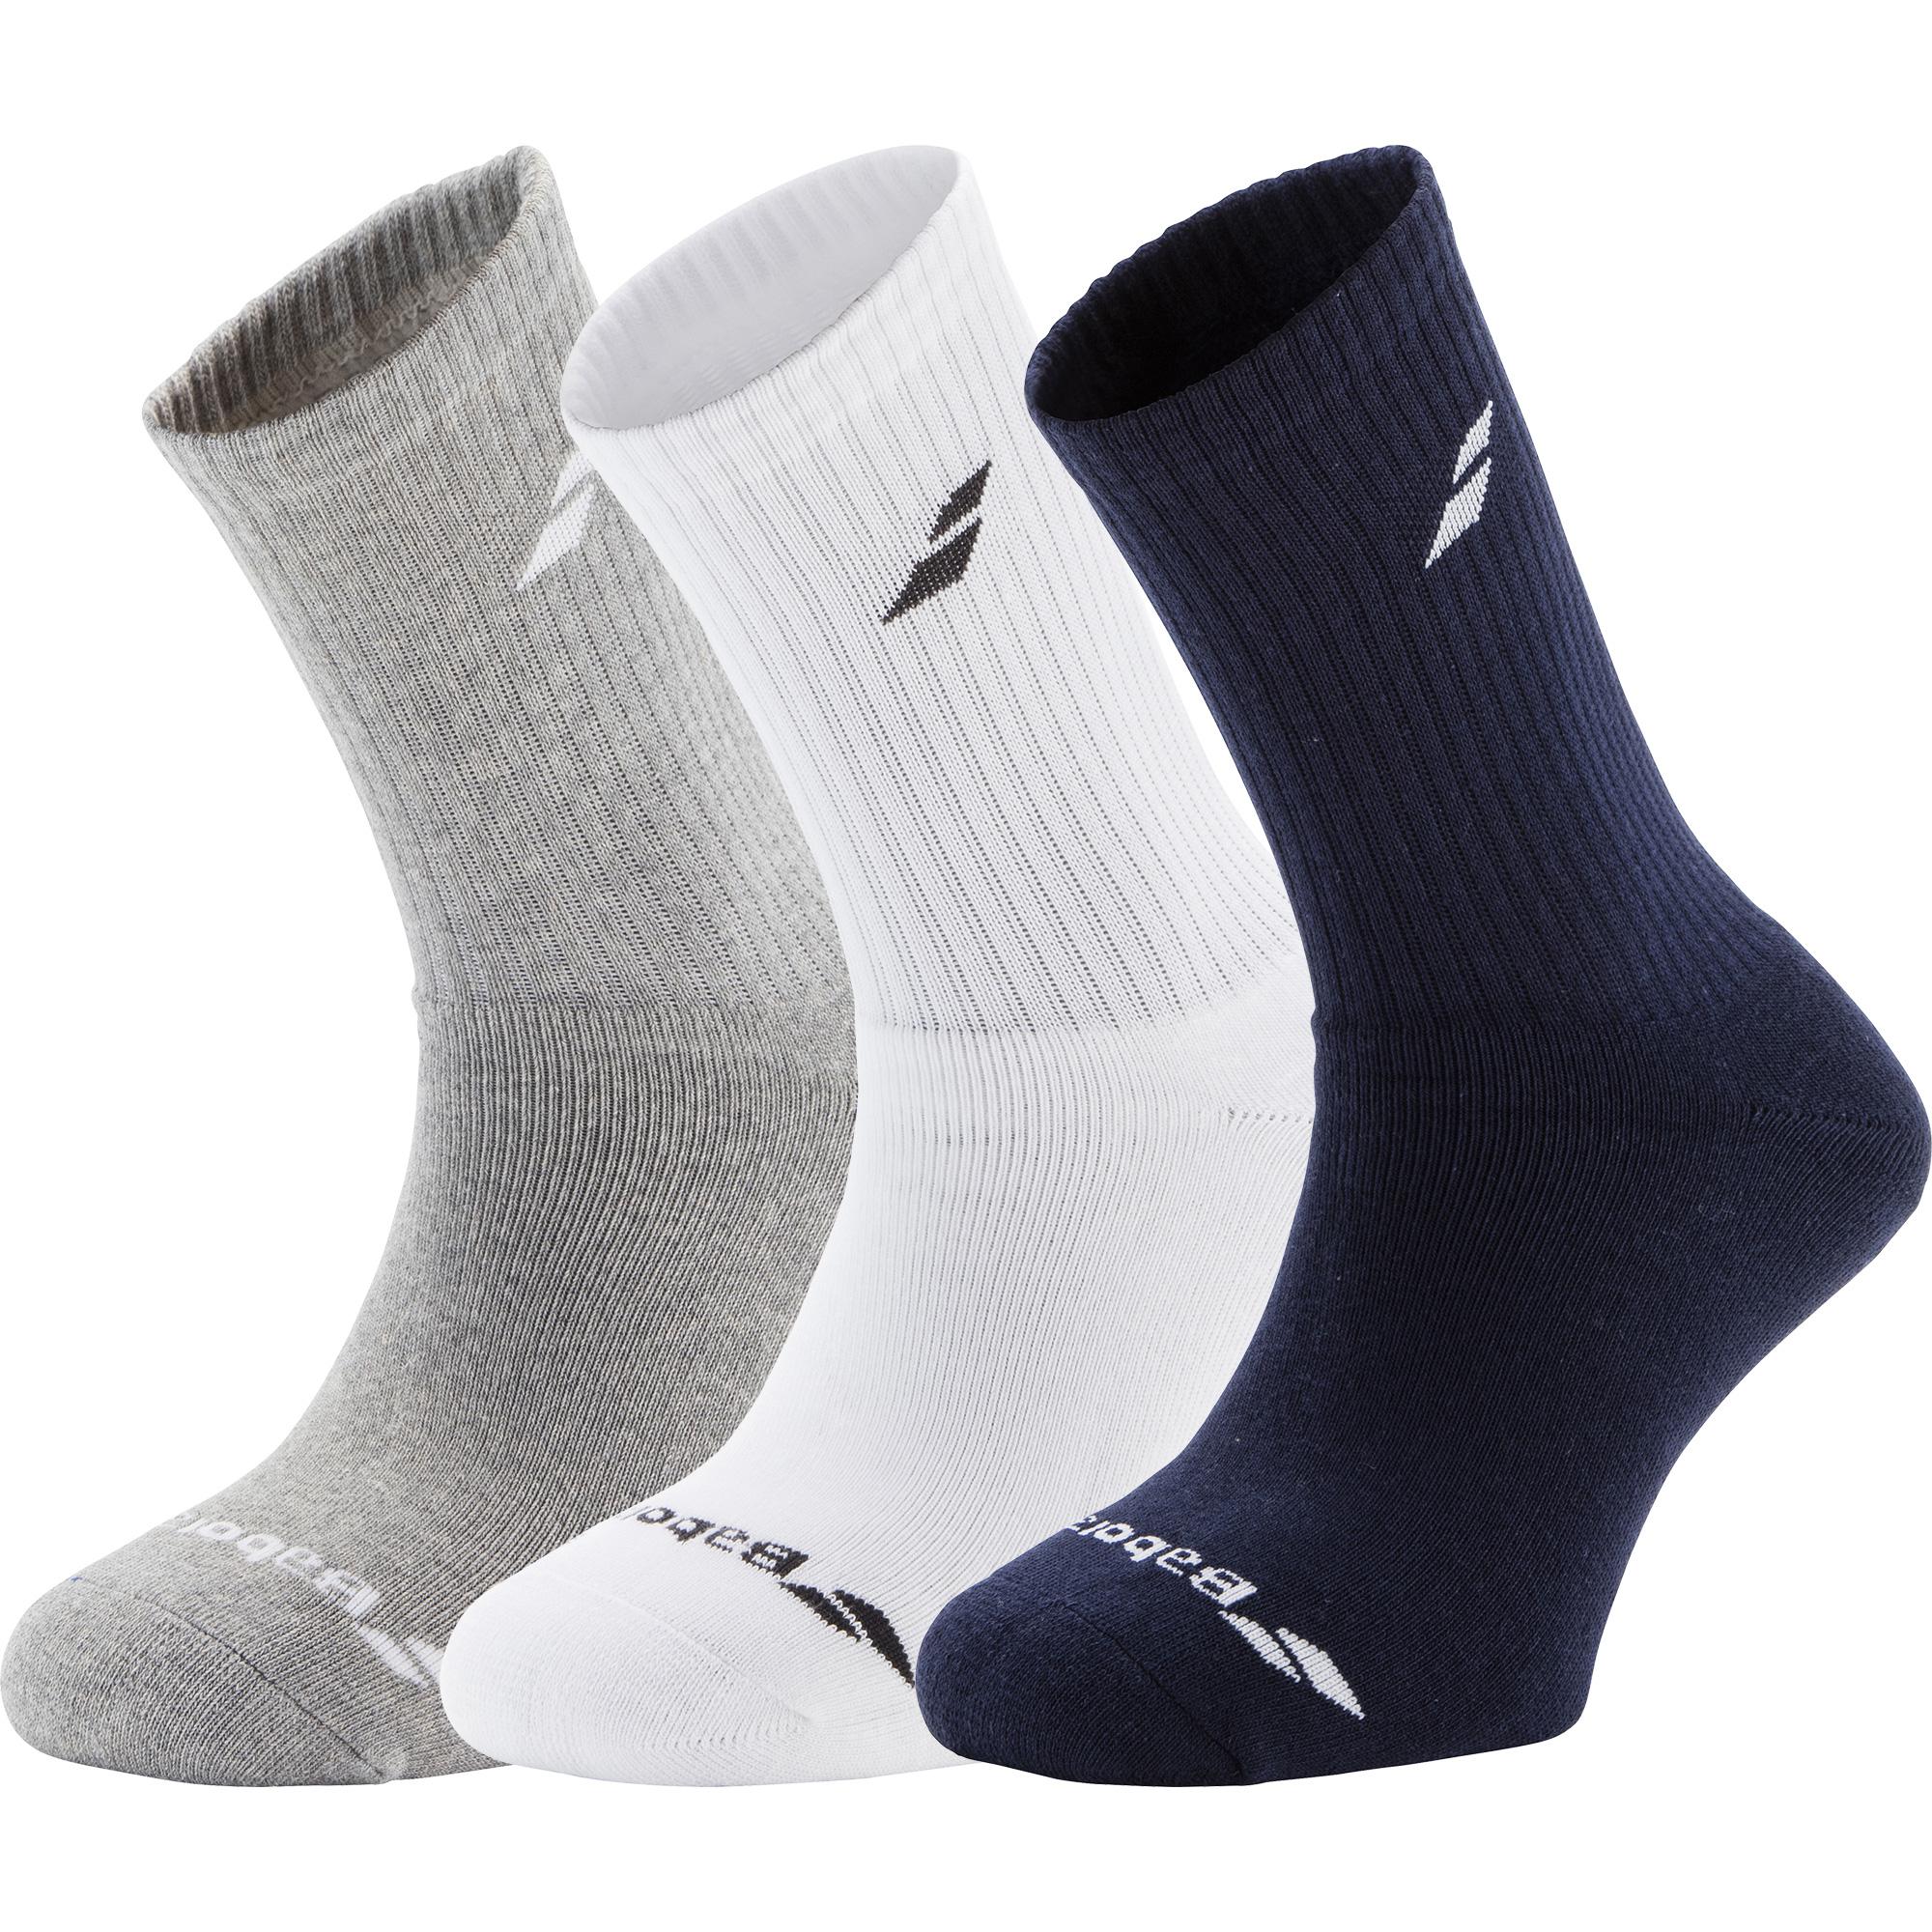 Babolat Sports Socks (3 Pairs) - Grey/White/Navy - Tennisnuts.com